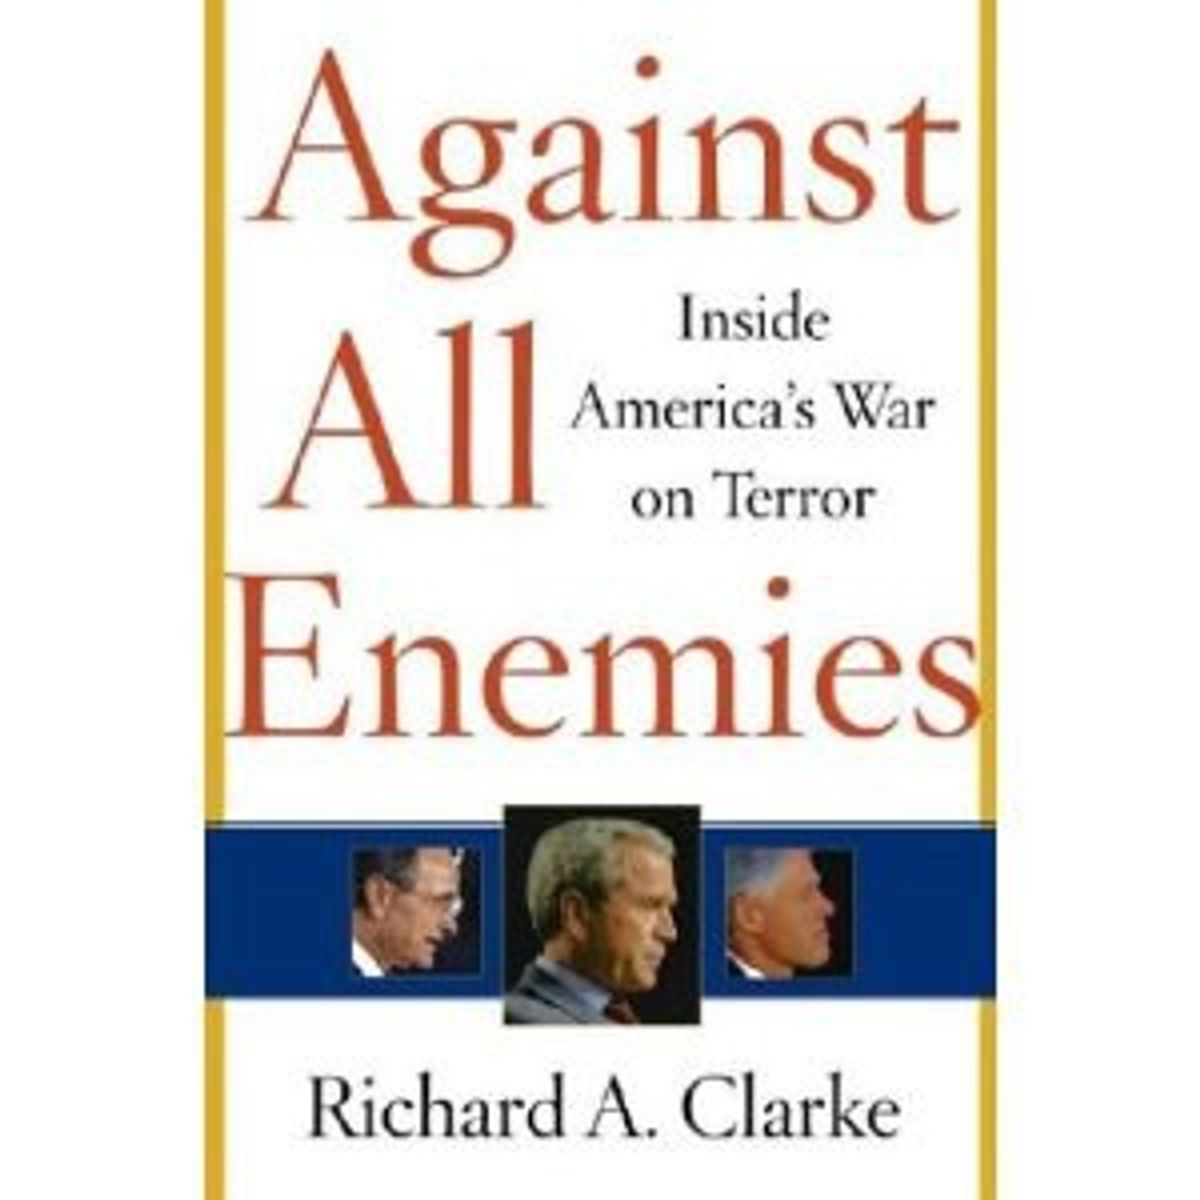 The Truth Spoken In Richard A. Clarke's "Against All Enemies"